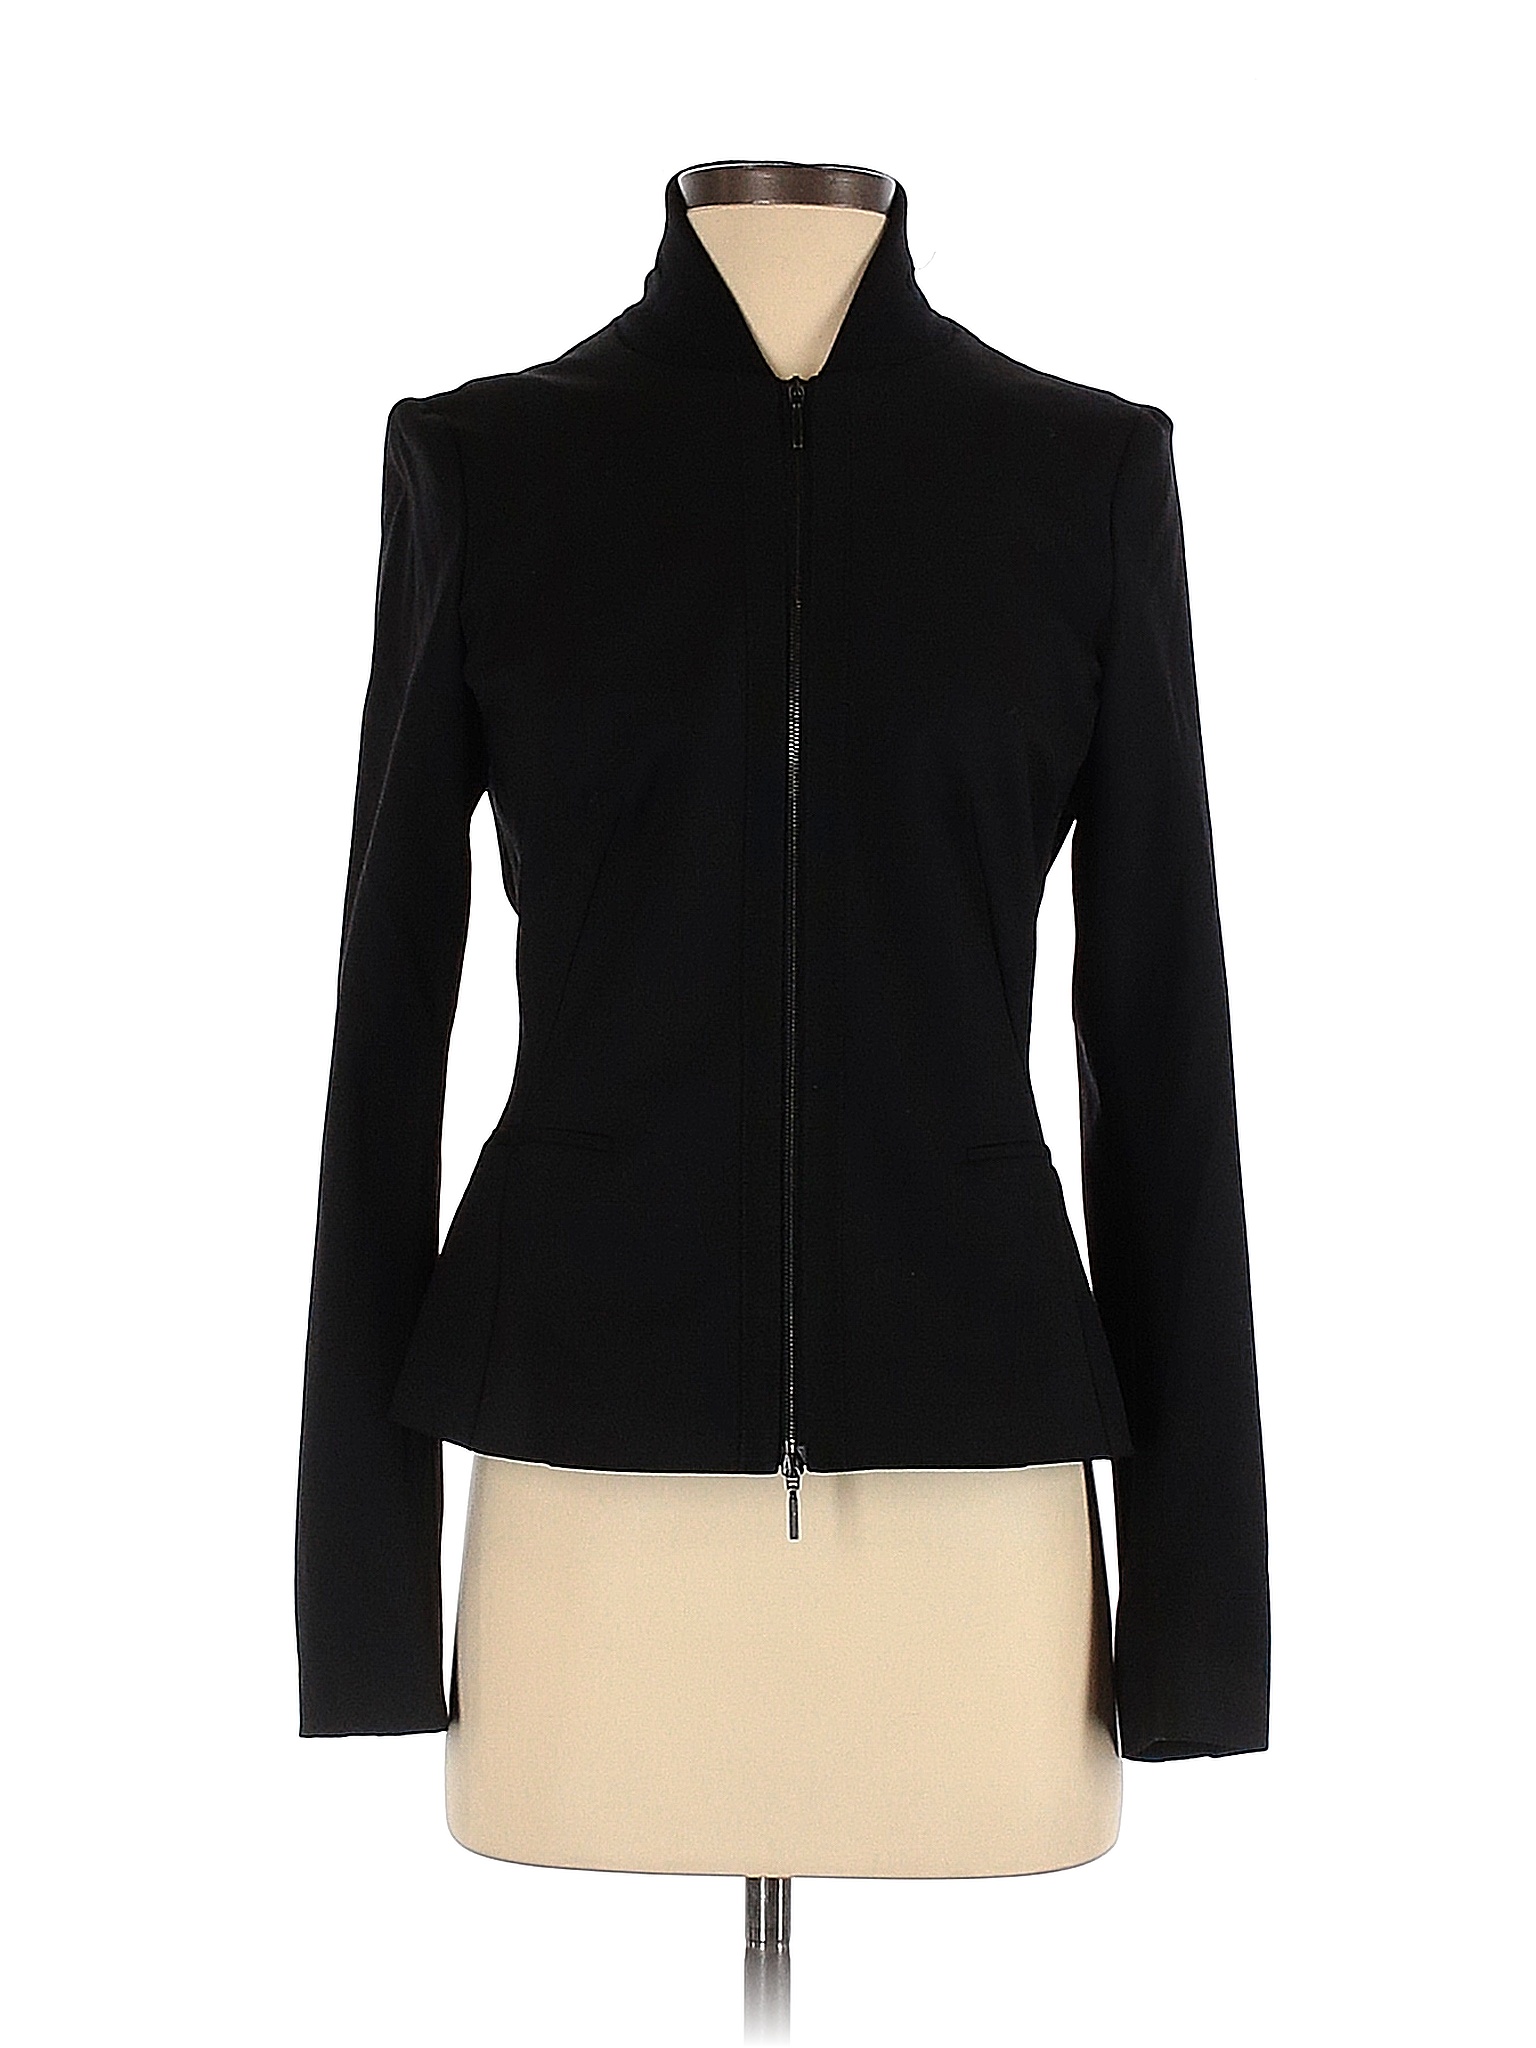 Piazza Sempione Solid Black Jacket Size 40 (IT) - 88% off | thredUP